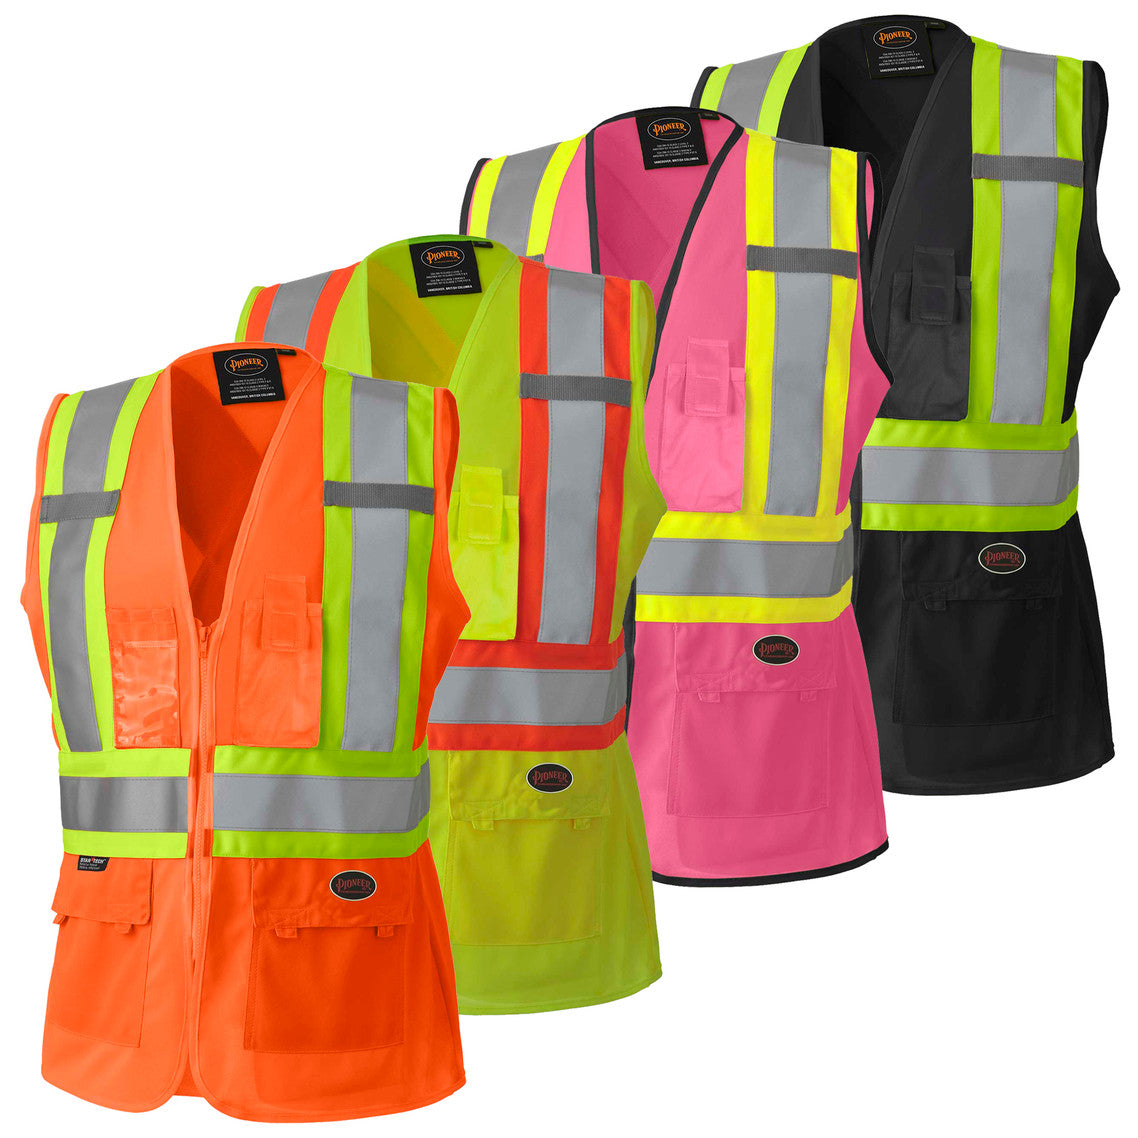 Pioneer 136 Hi-Viz Orange Women's Safety Vest